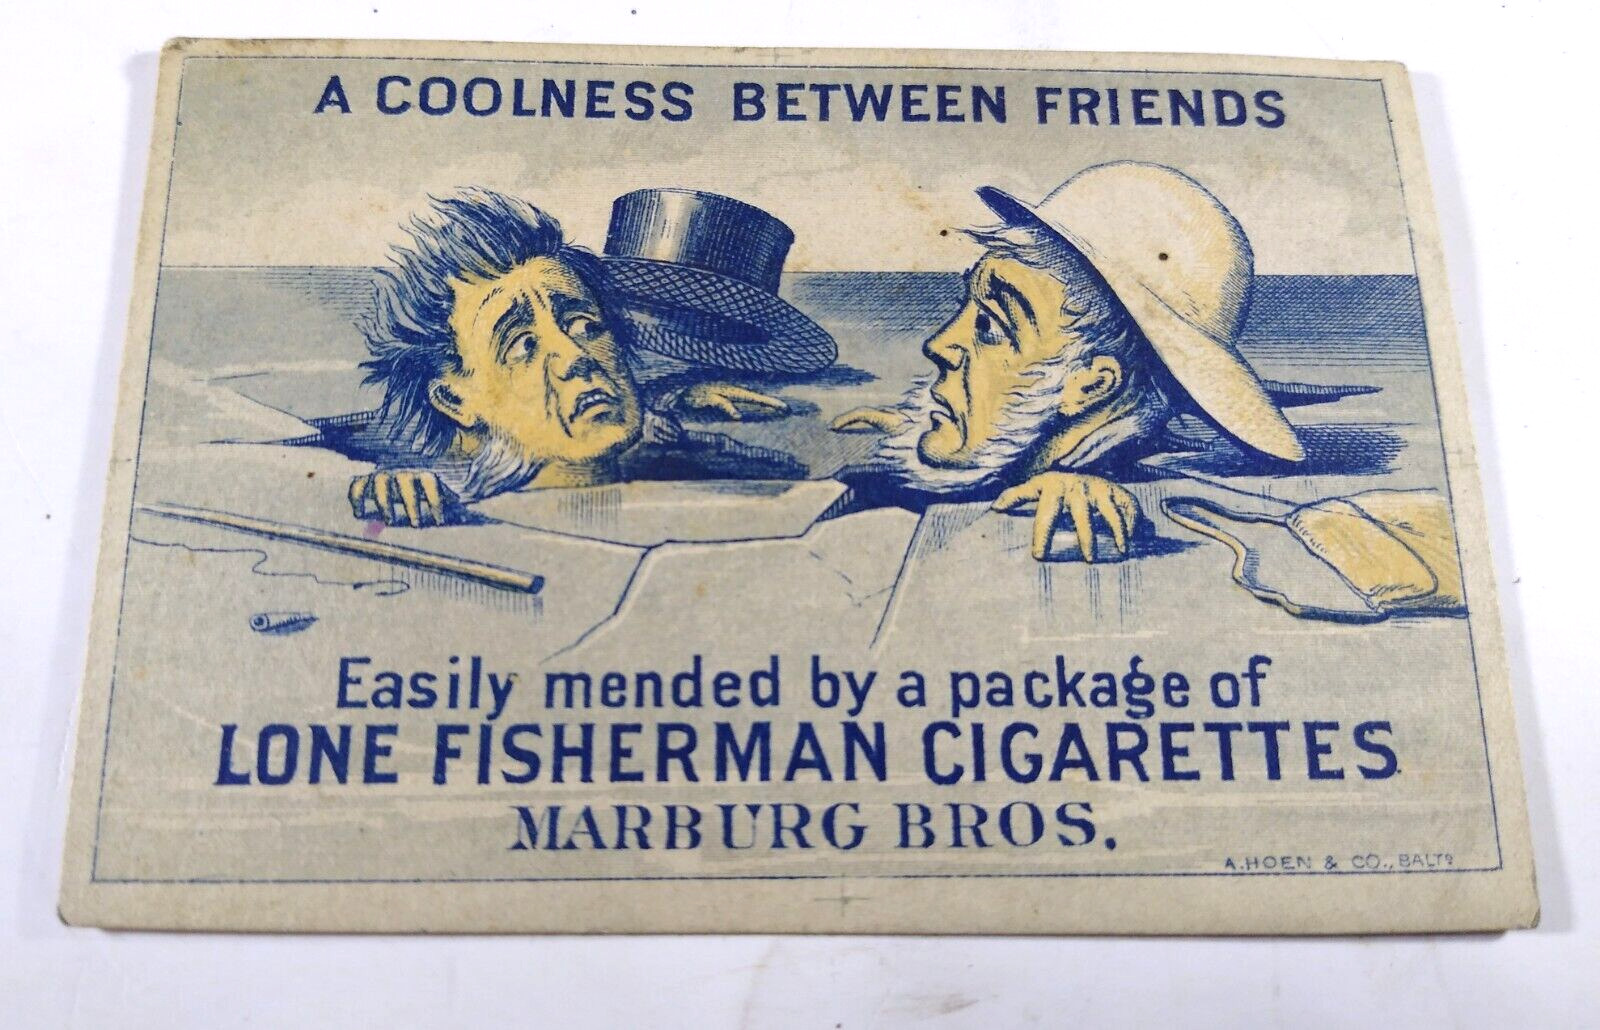 Lone Fisherman Marburg Bros Cigarettes Tobacco Trade Card - Lonliness, 1880s?